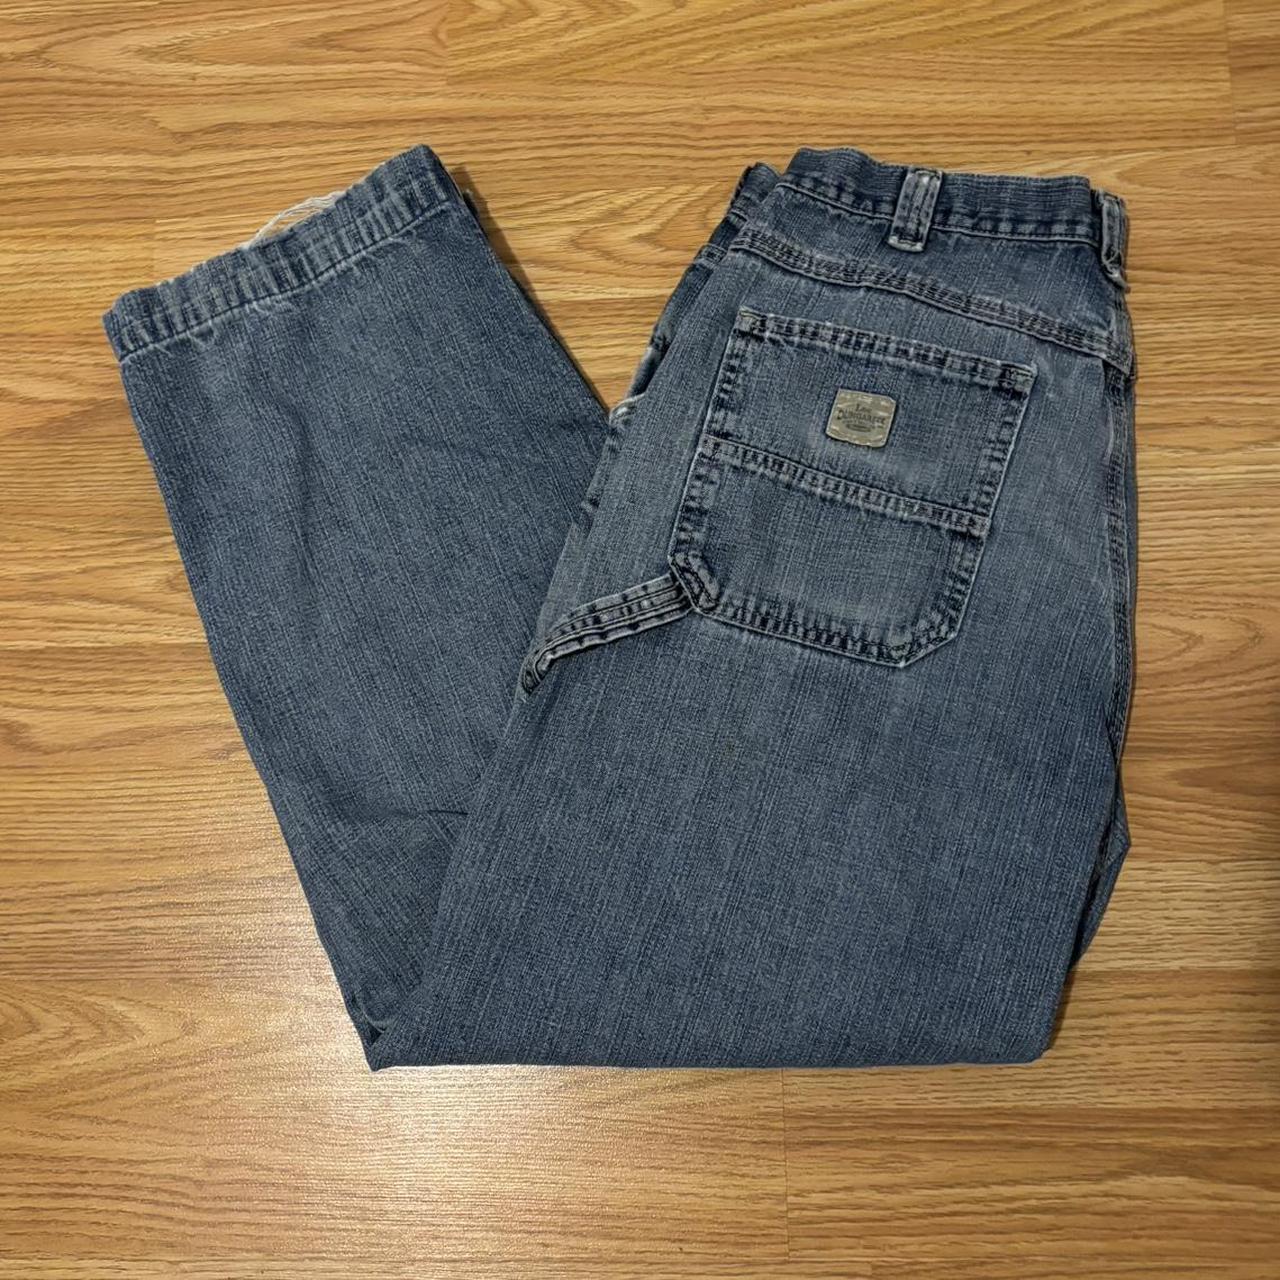 Lee jeans-vintage - Depop